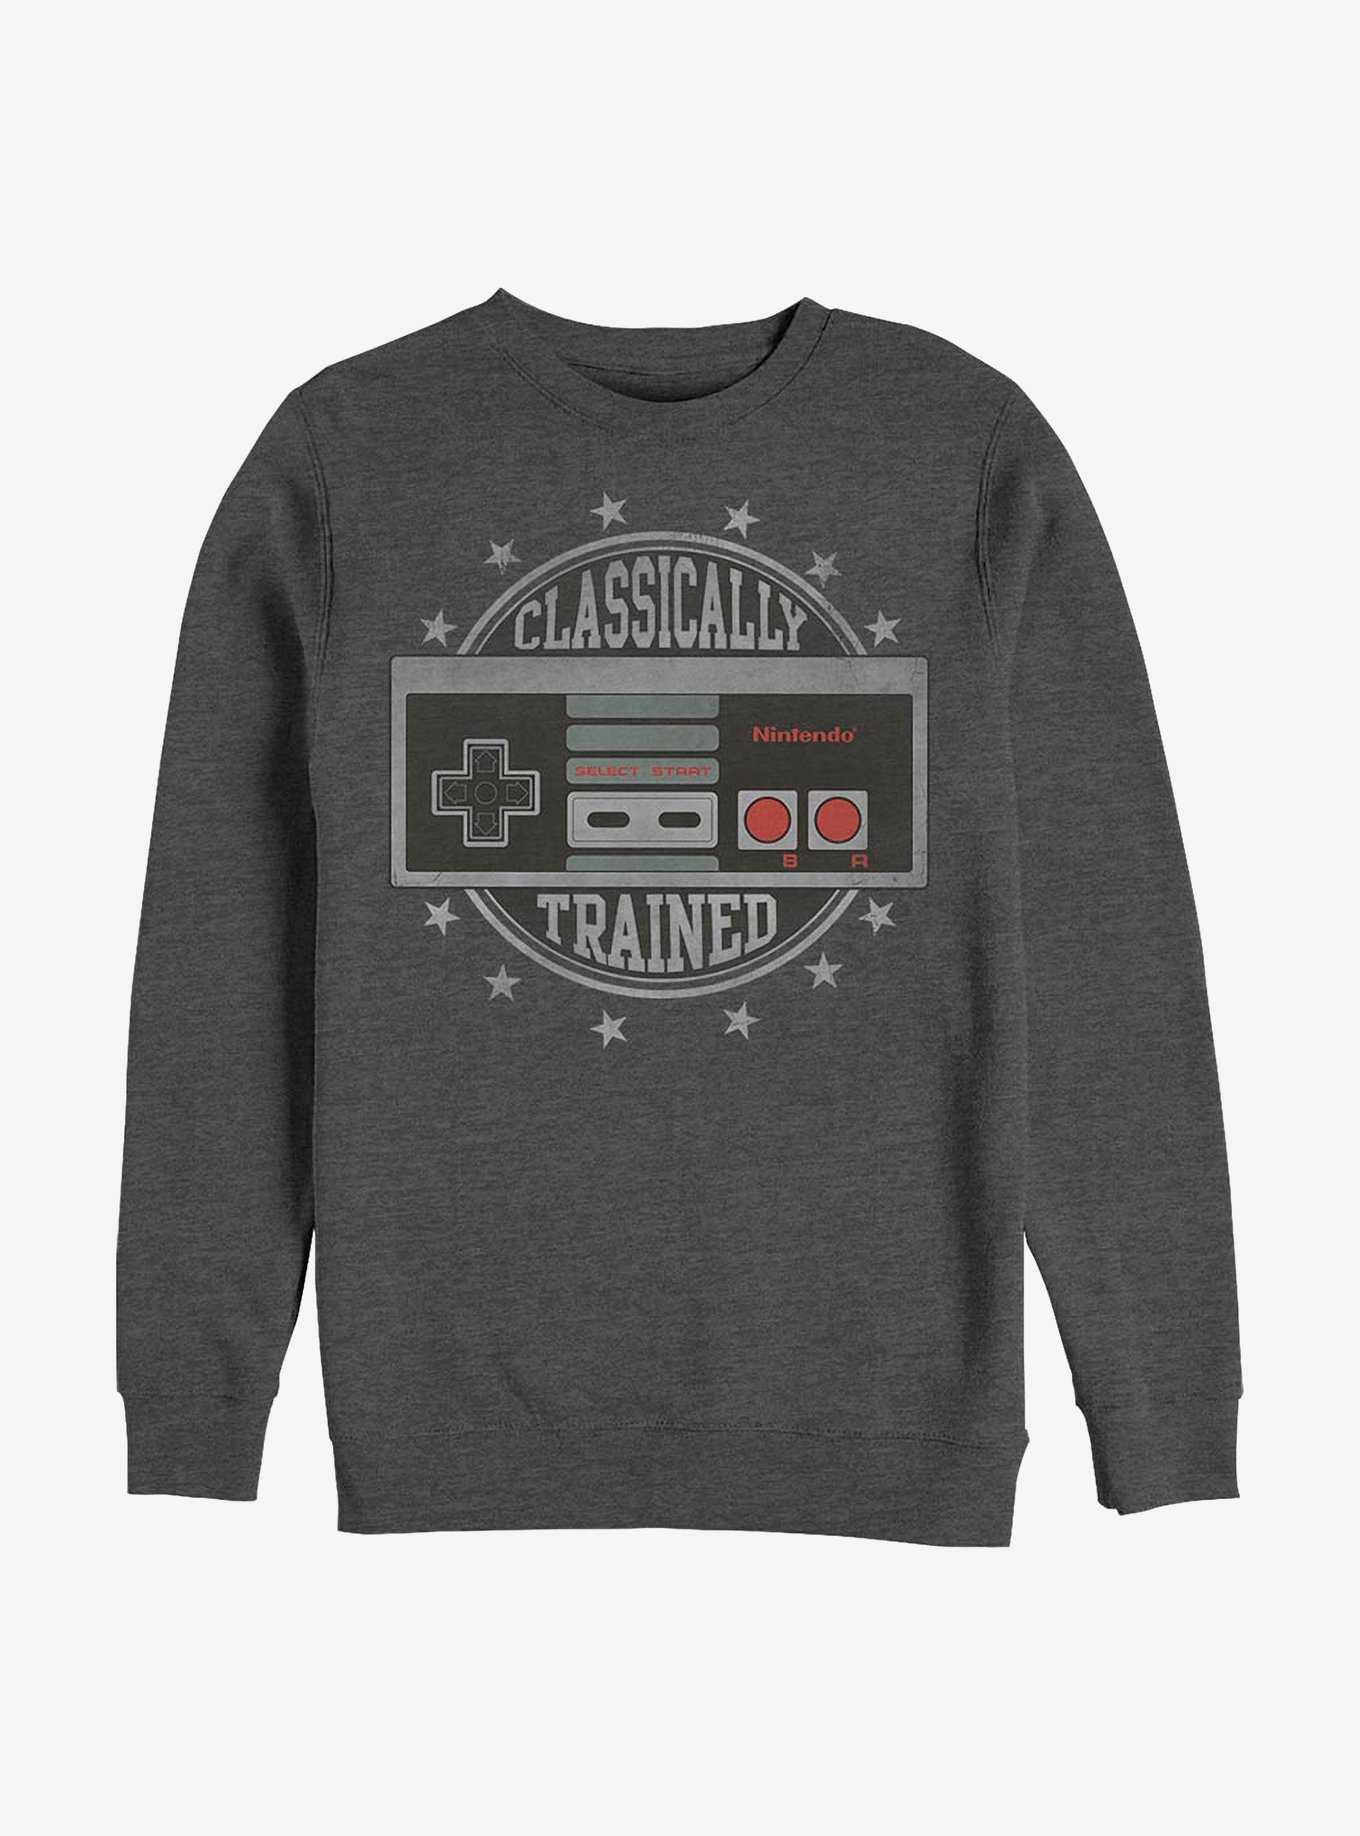 Nintendo Classically Trained Crew Sweatshirt, , hi-res